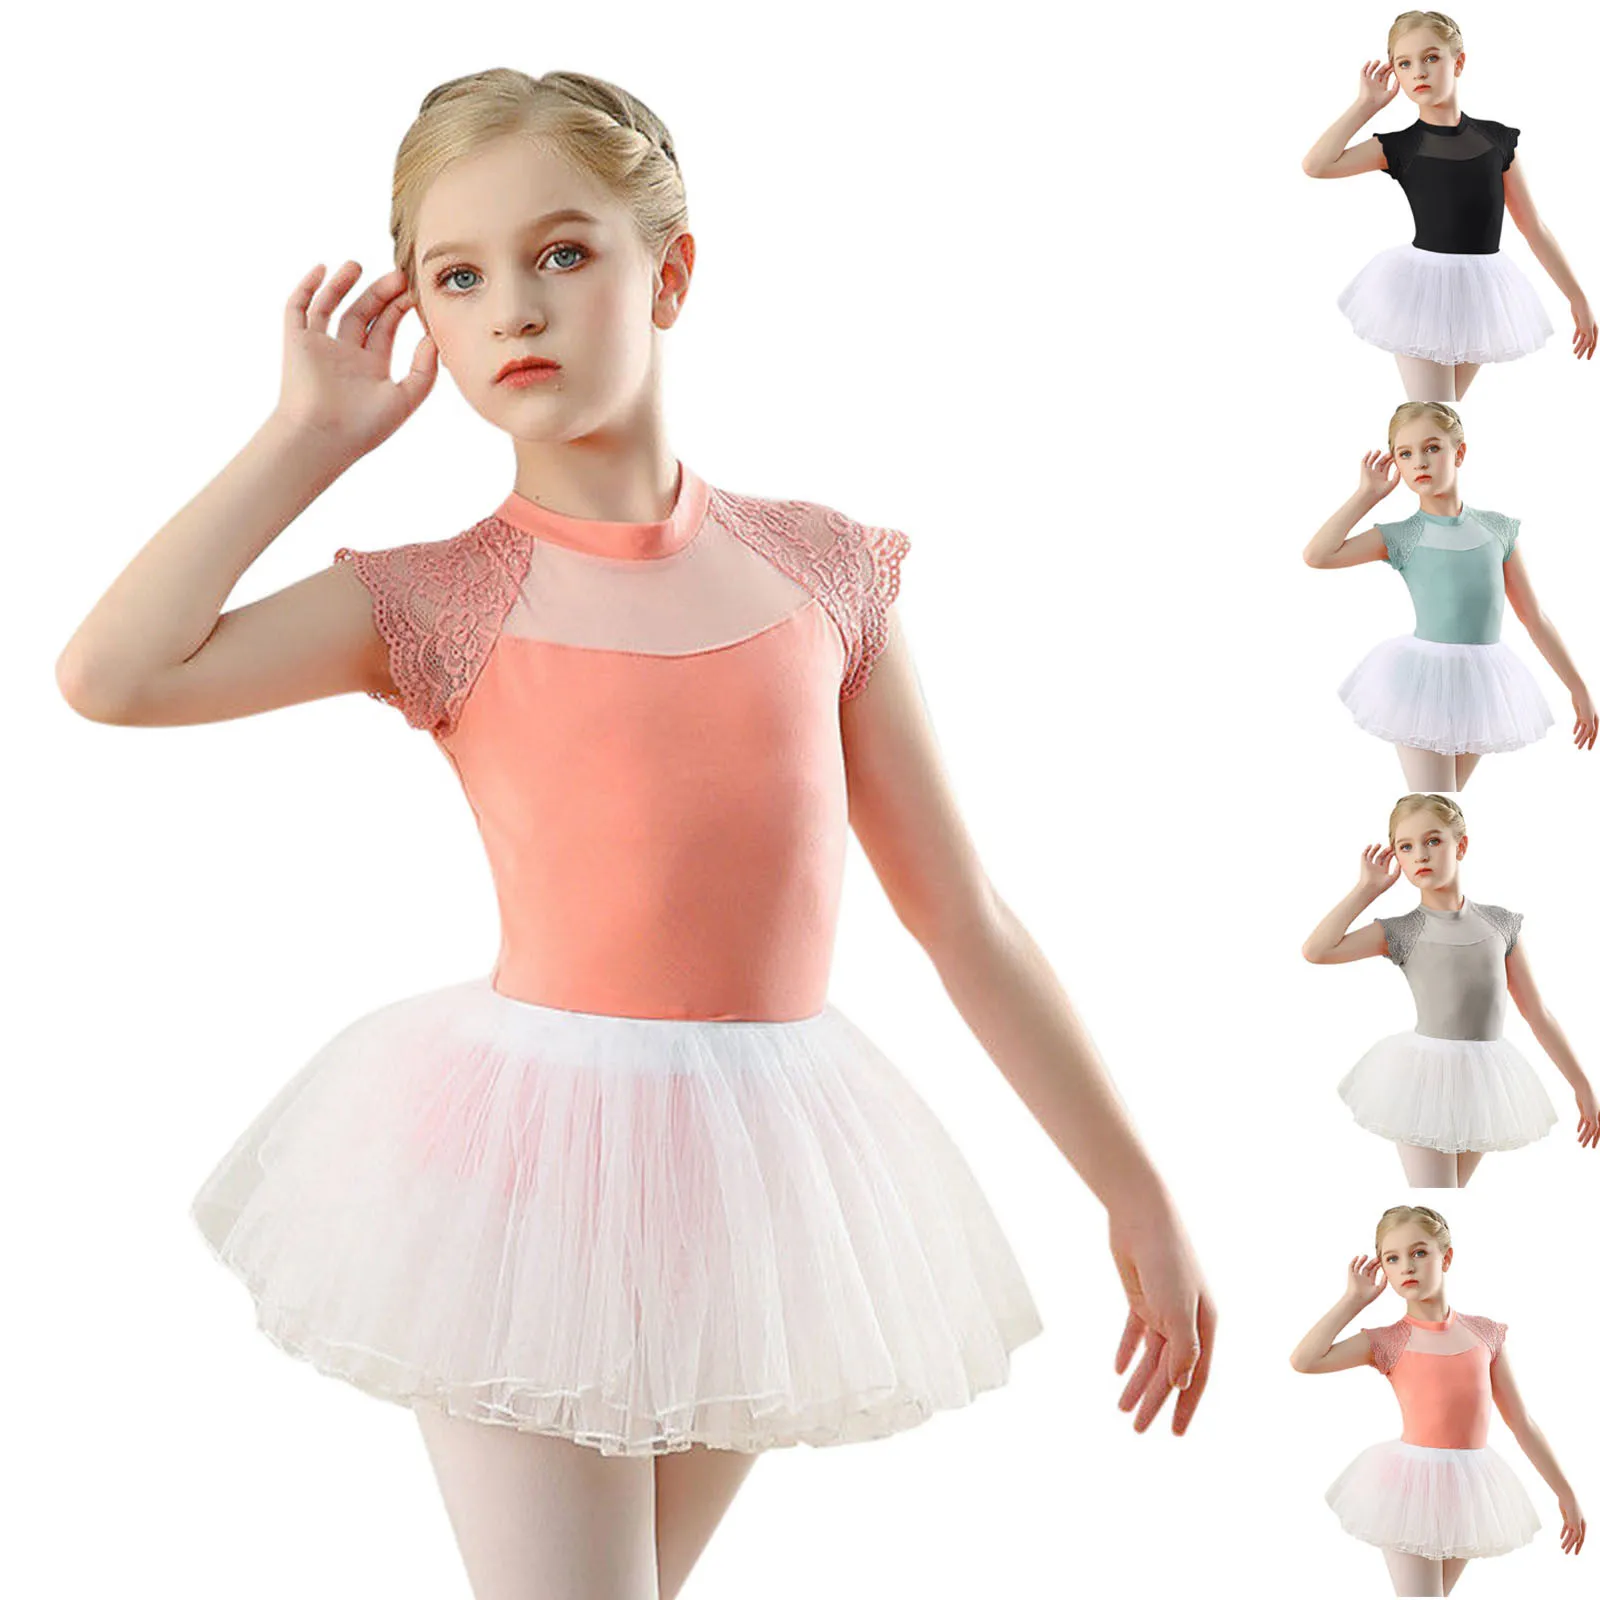 Girls Ballet Dance Leotards Kids Lace Spliced Sleeve Leotards+Removable Tutu Skirts Skating Gymnastics Practice Dancewear 3-13Y